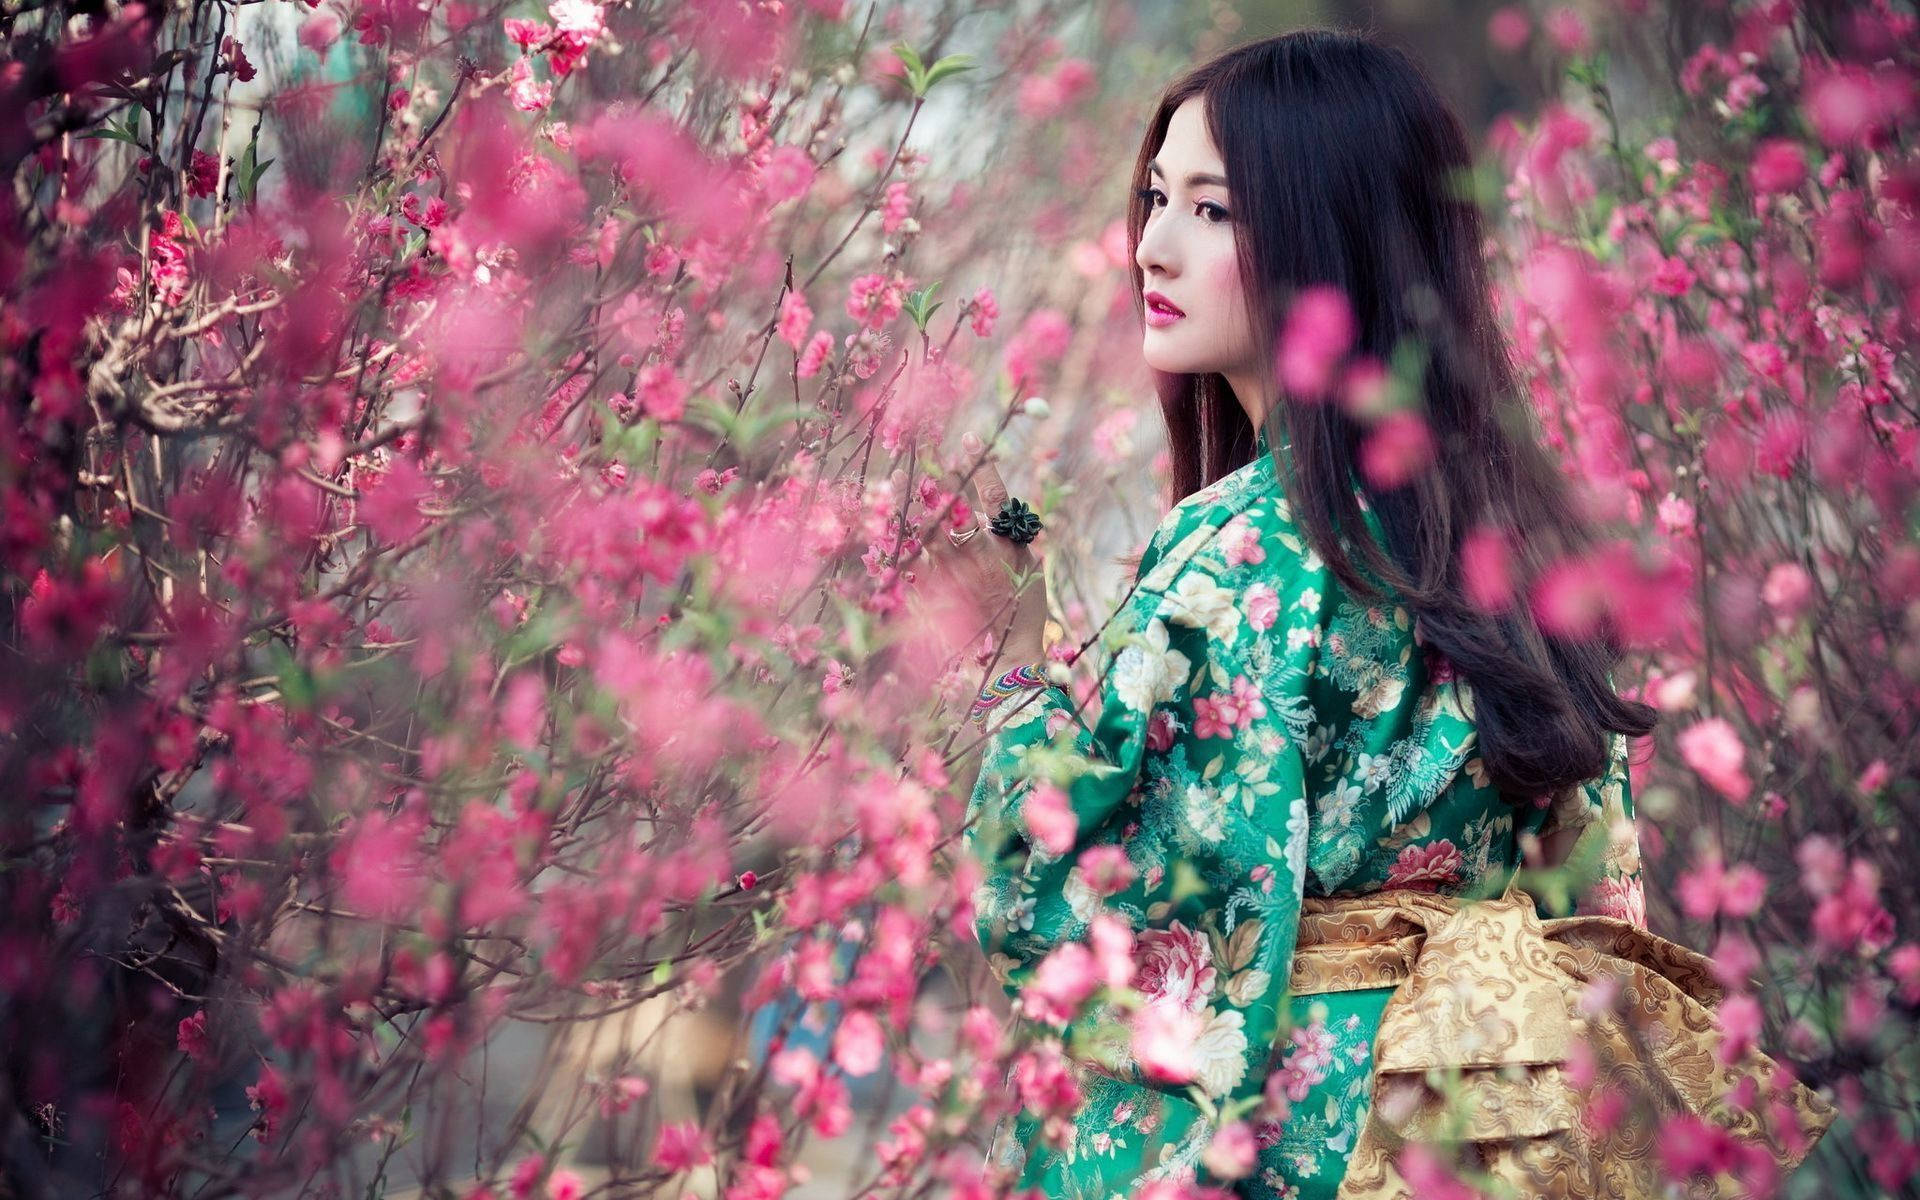 Japan Girl In Pink Flower Field Background